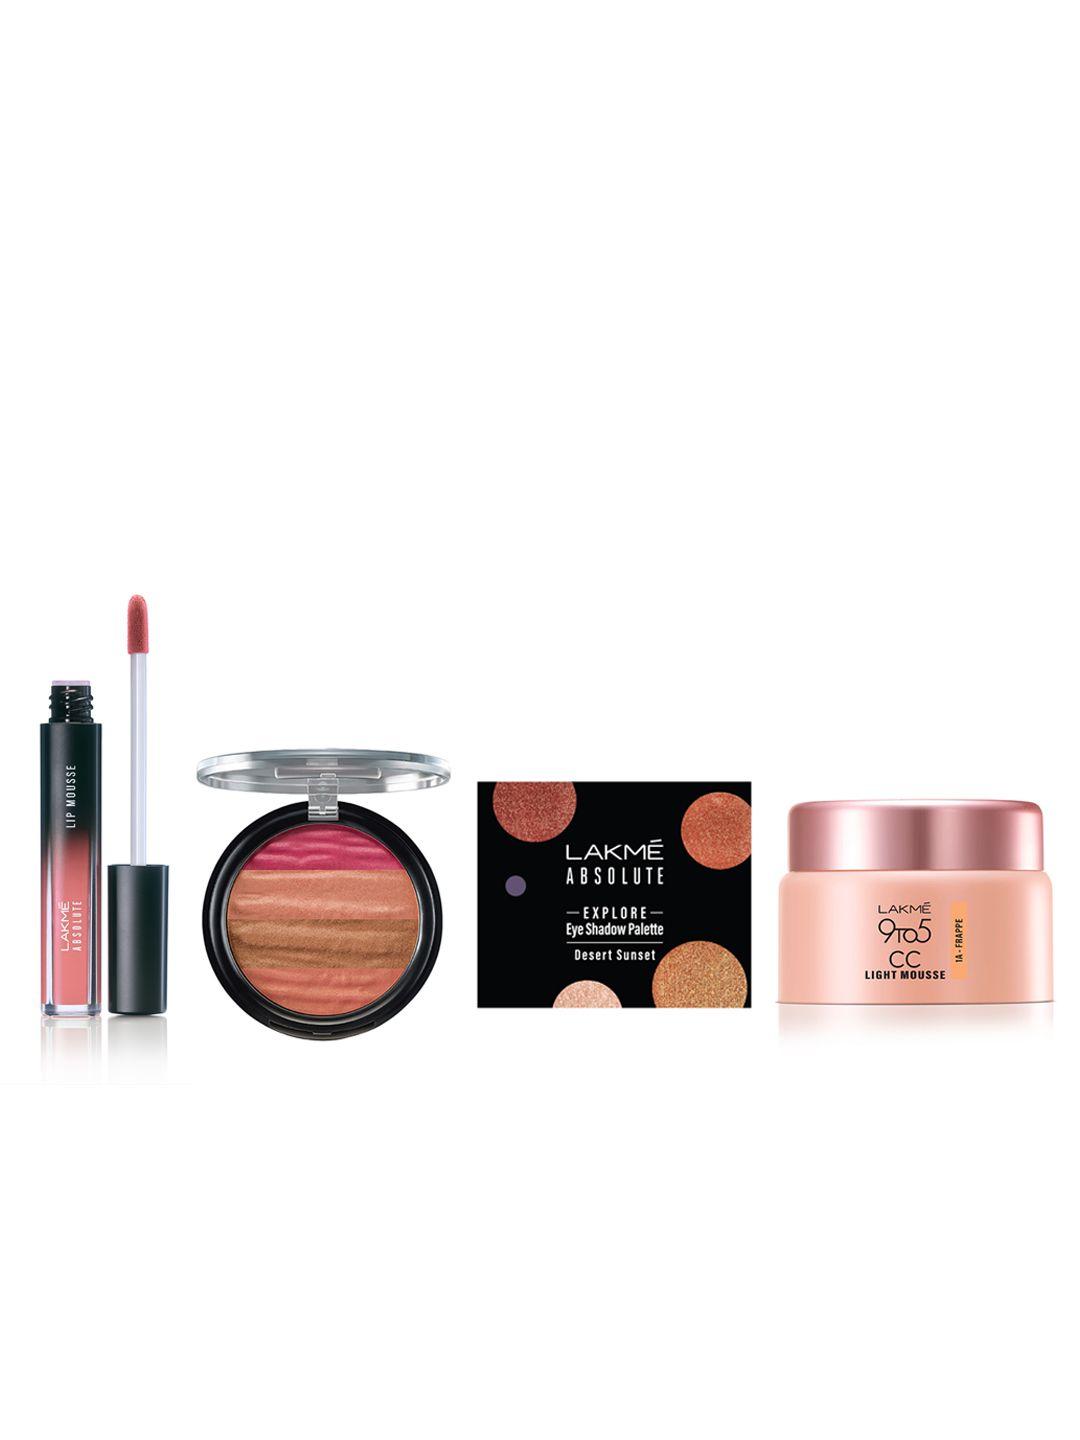 lakme makeup gift set - mousse 25g  + eyeshadow 10g + lipstick 4.6g + blush 10g